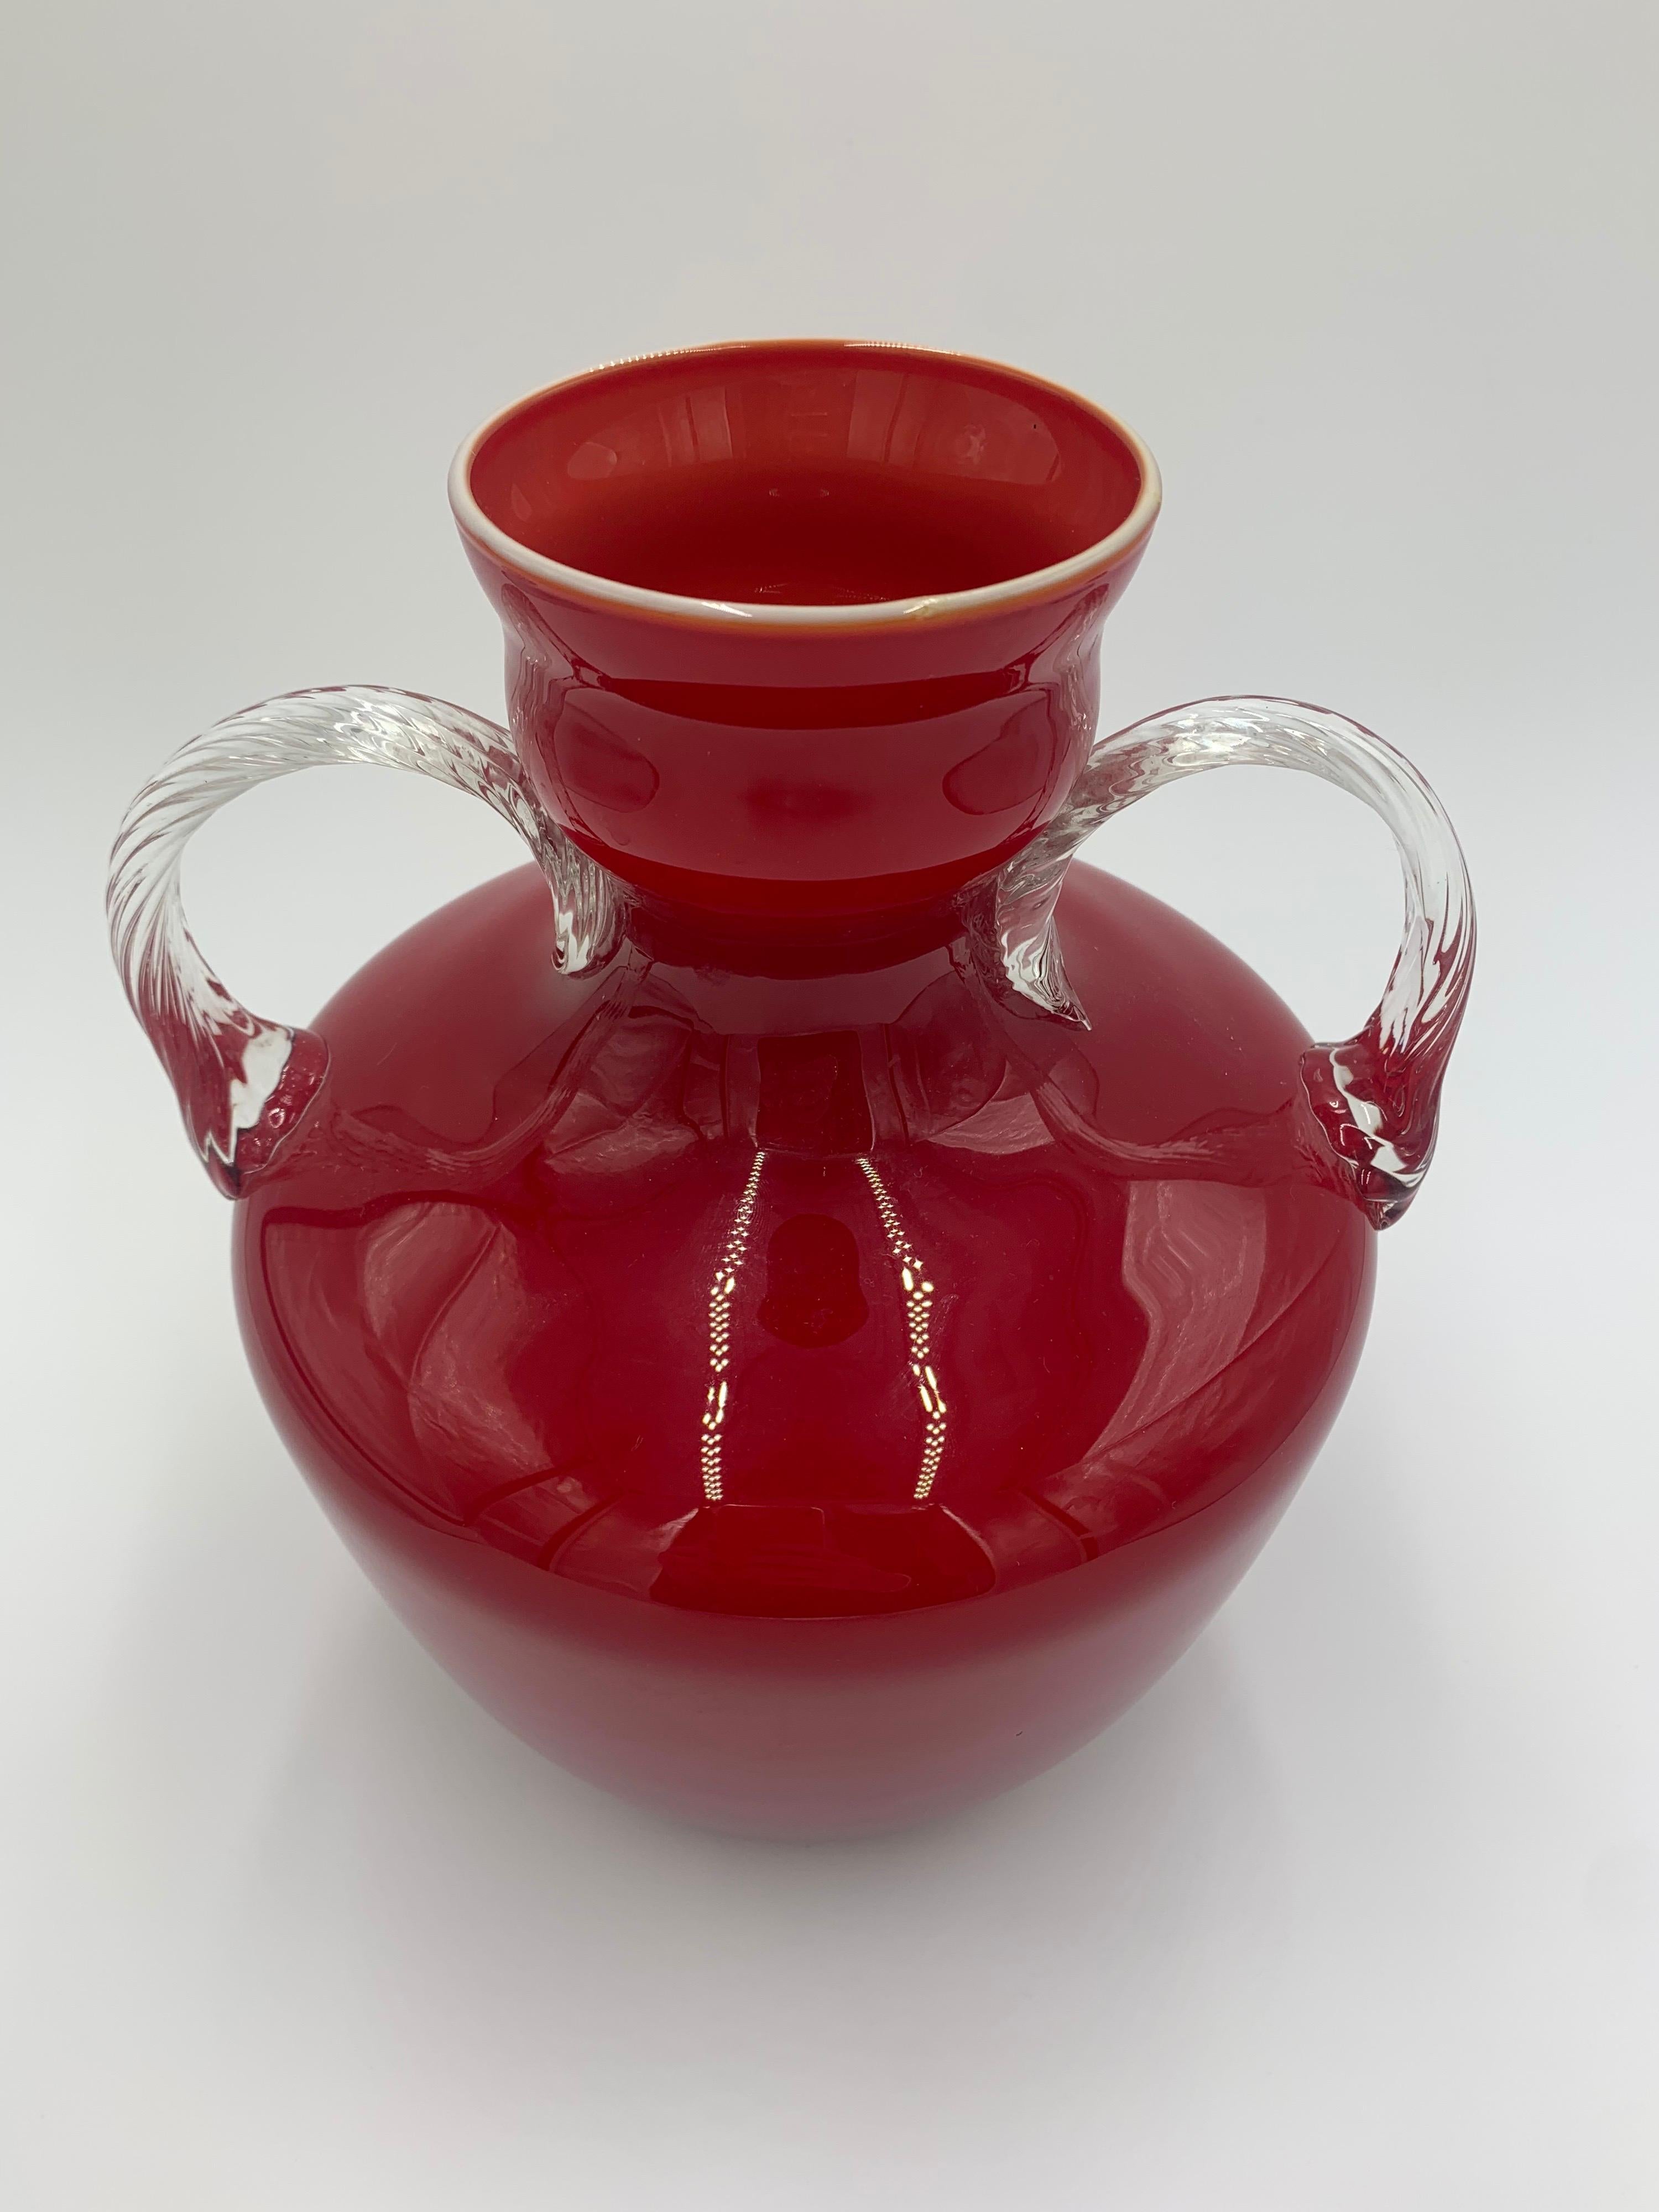 1960s red glass vase